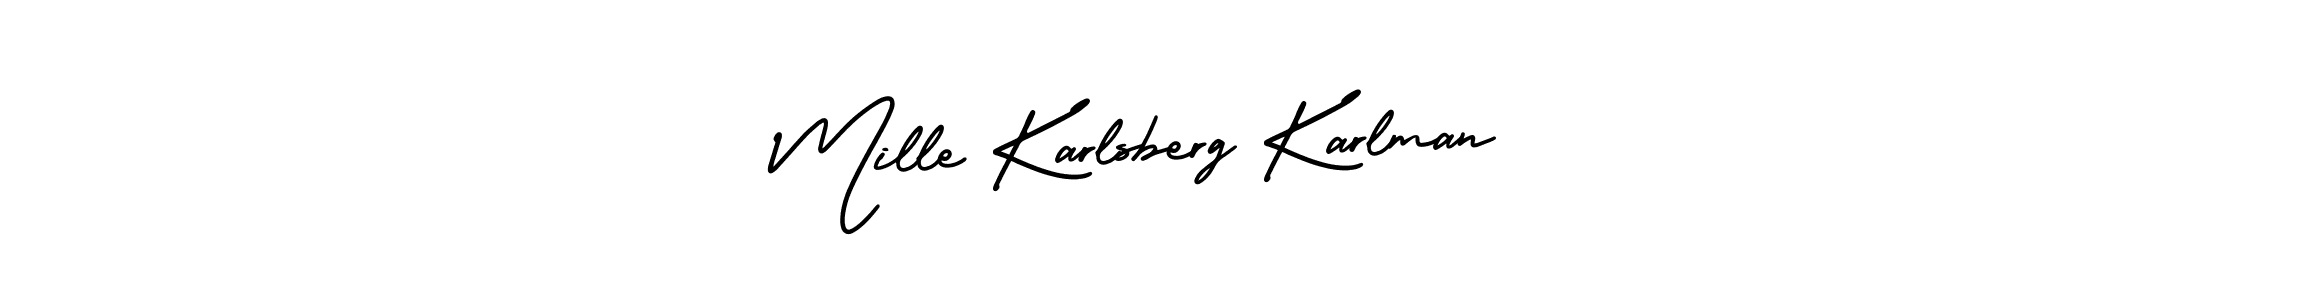 Best and Professional Signature Style for Mille Karlsberg Karlman. AmerikaSignatureDemo-Regular Best Signature Style Collection. Mille Karlsberg Karlman signature style 3 images and pictures png